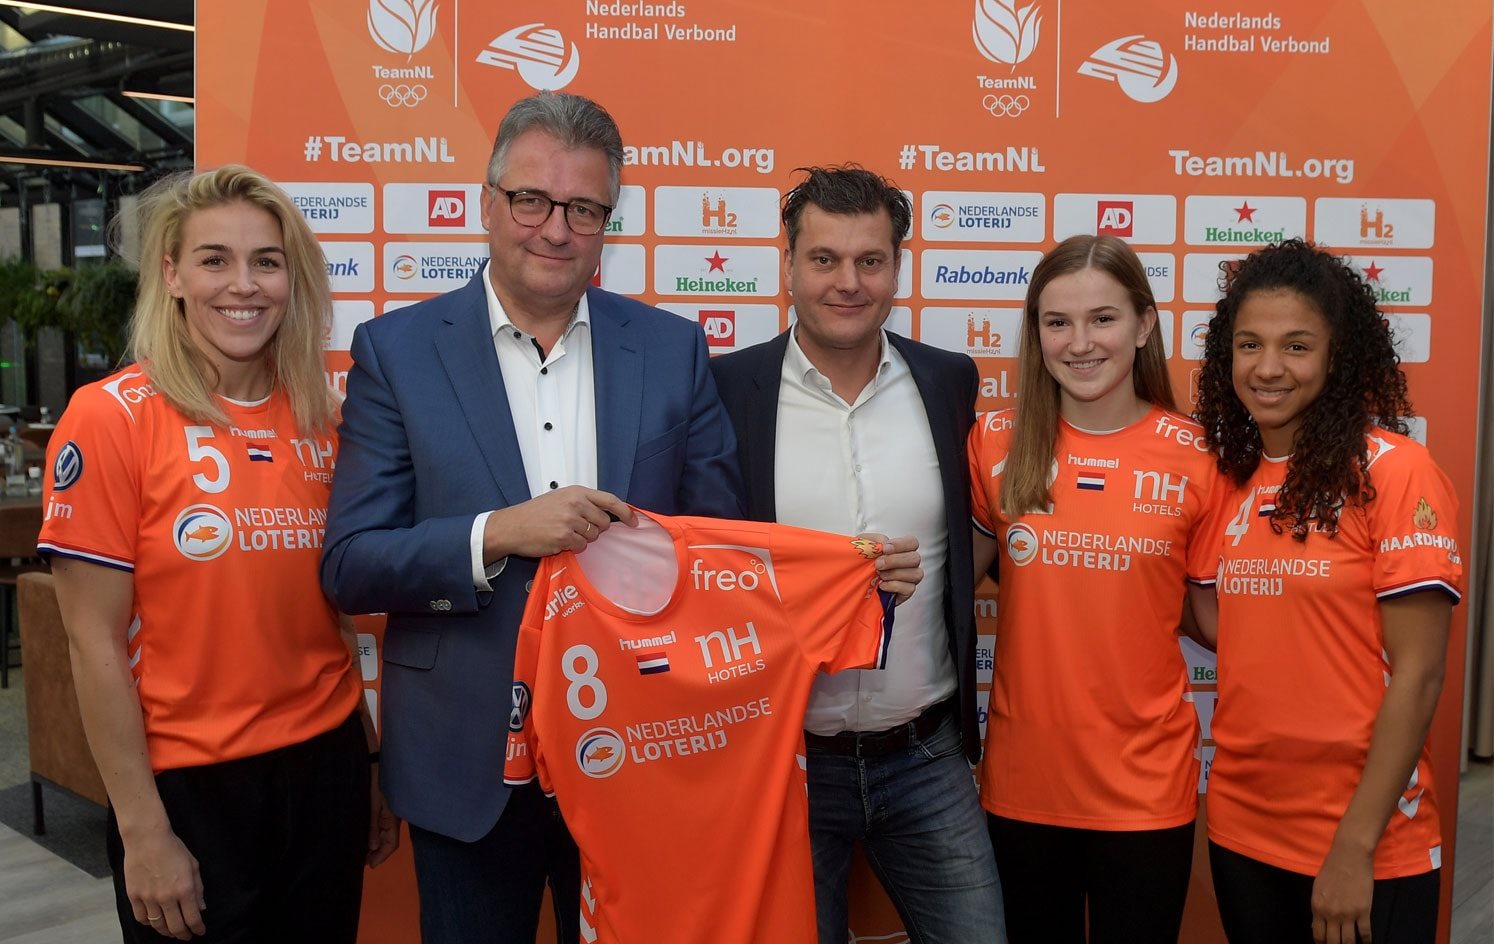 Freo trotse sponsor van Nederlandse handbaldames